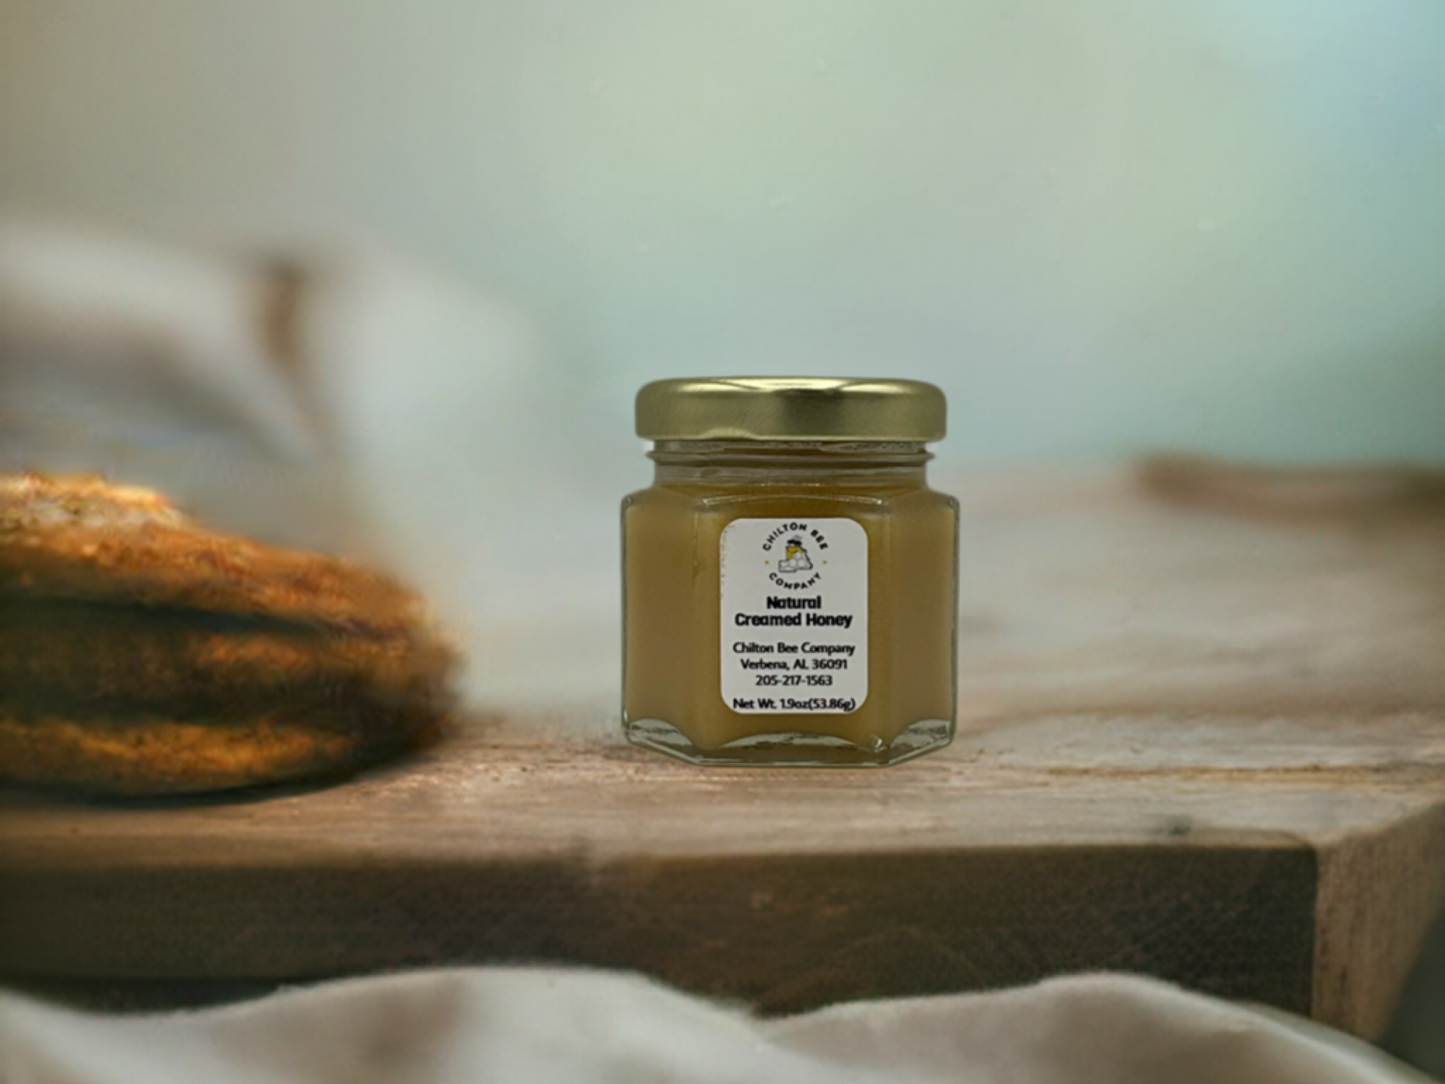  Creamed Honey - Pure & Delicious Chilton Bee Company